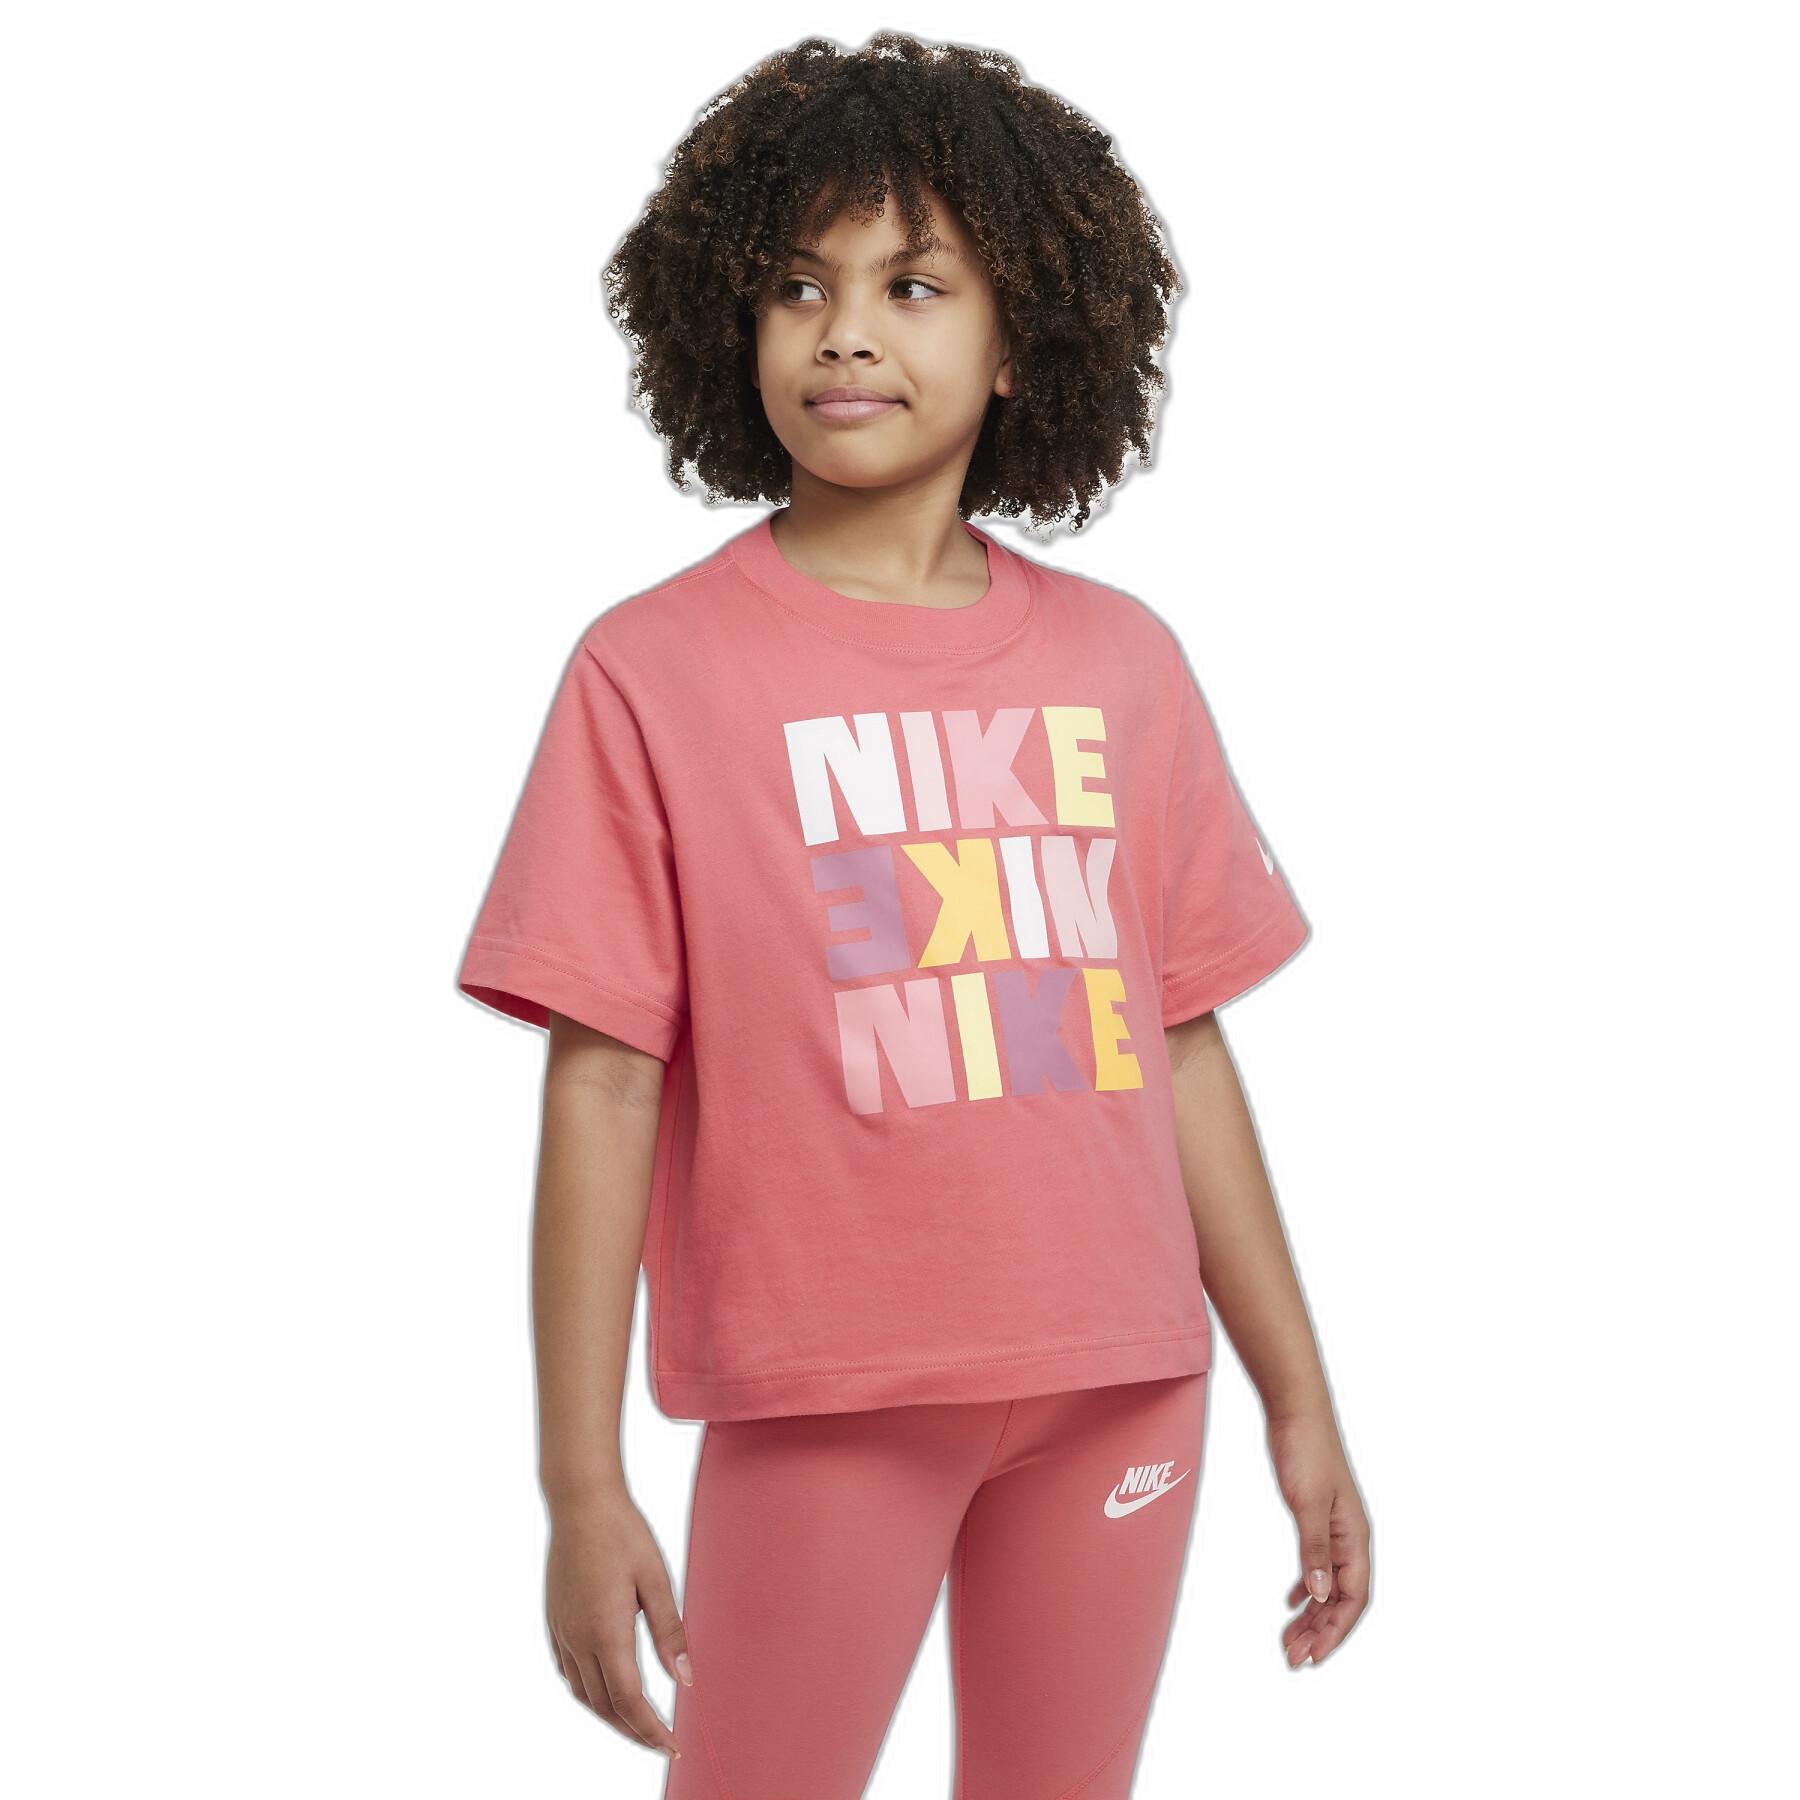 T-shirt fille Nike Boxy Print